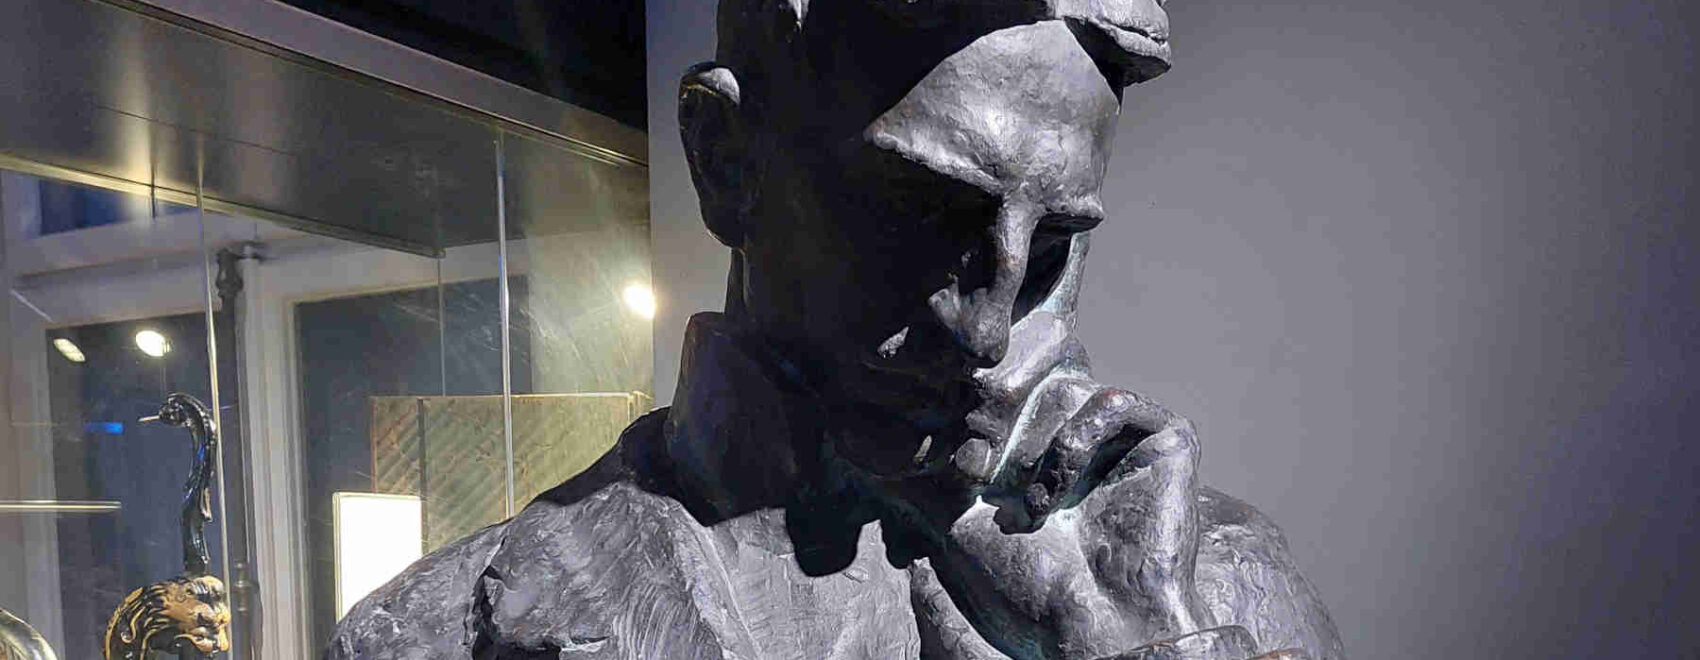 Nikola Tesla statue in the museum dedicated to the scientist